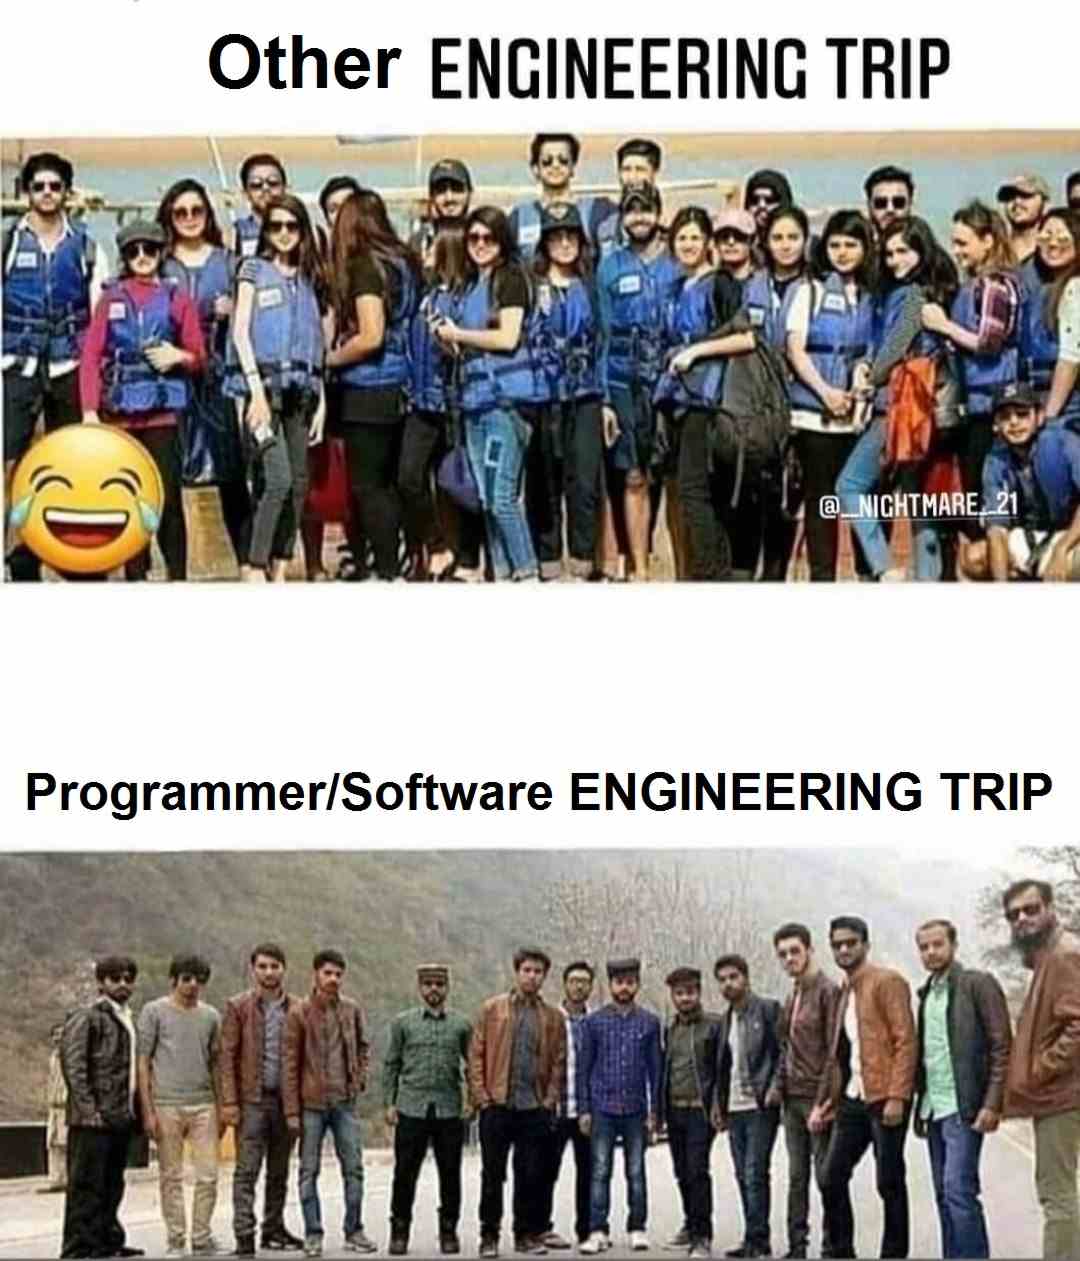 Software Engineering Trip vs Other Engineering Trip